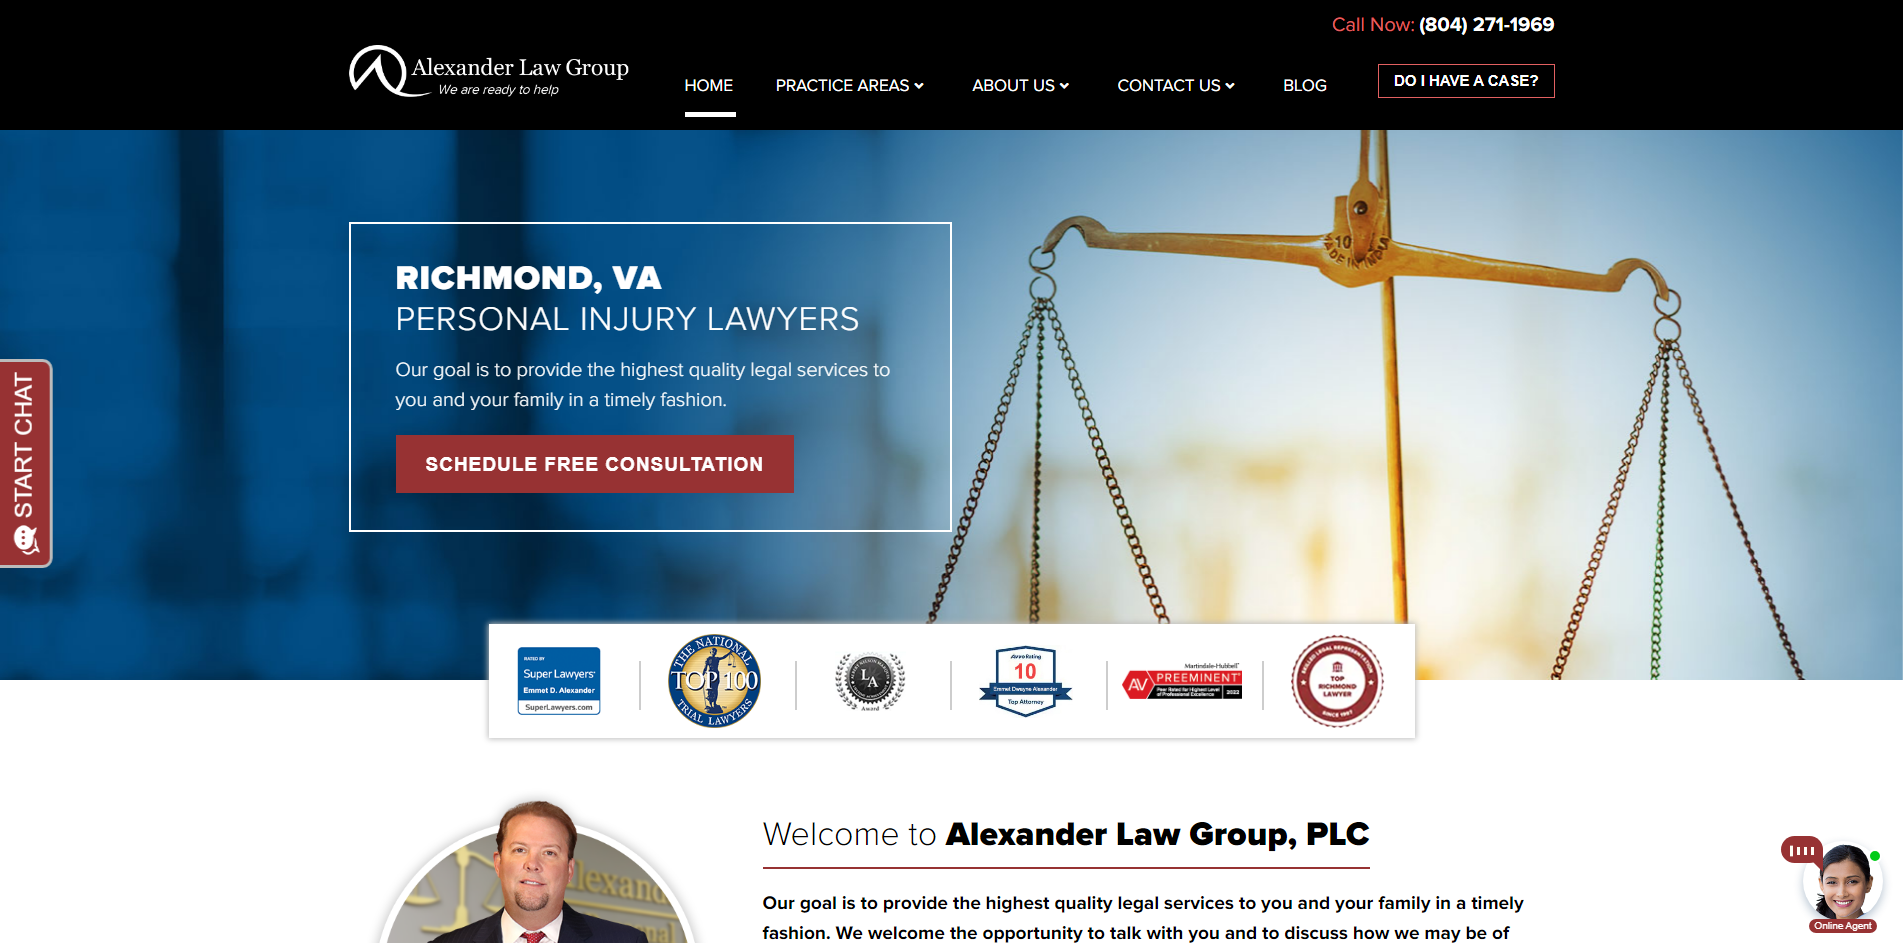 Alexander Law Group PLC